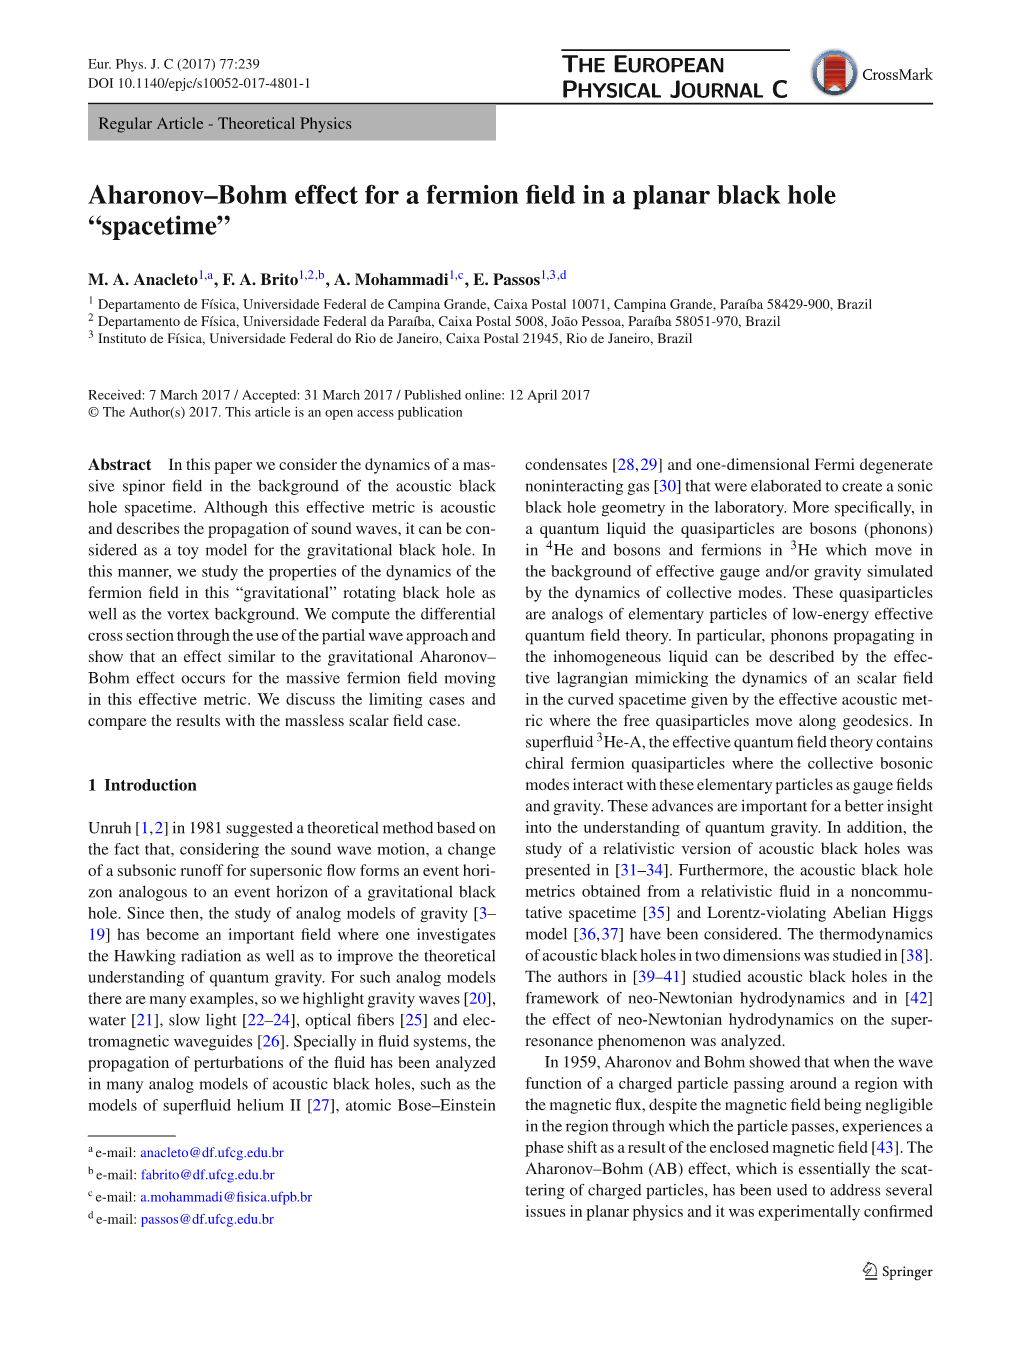 Aharonov–Bohm Effect for a Fermion Field in a Planar Black Hole